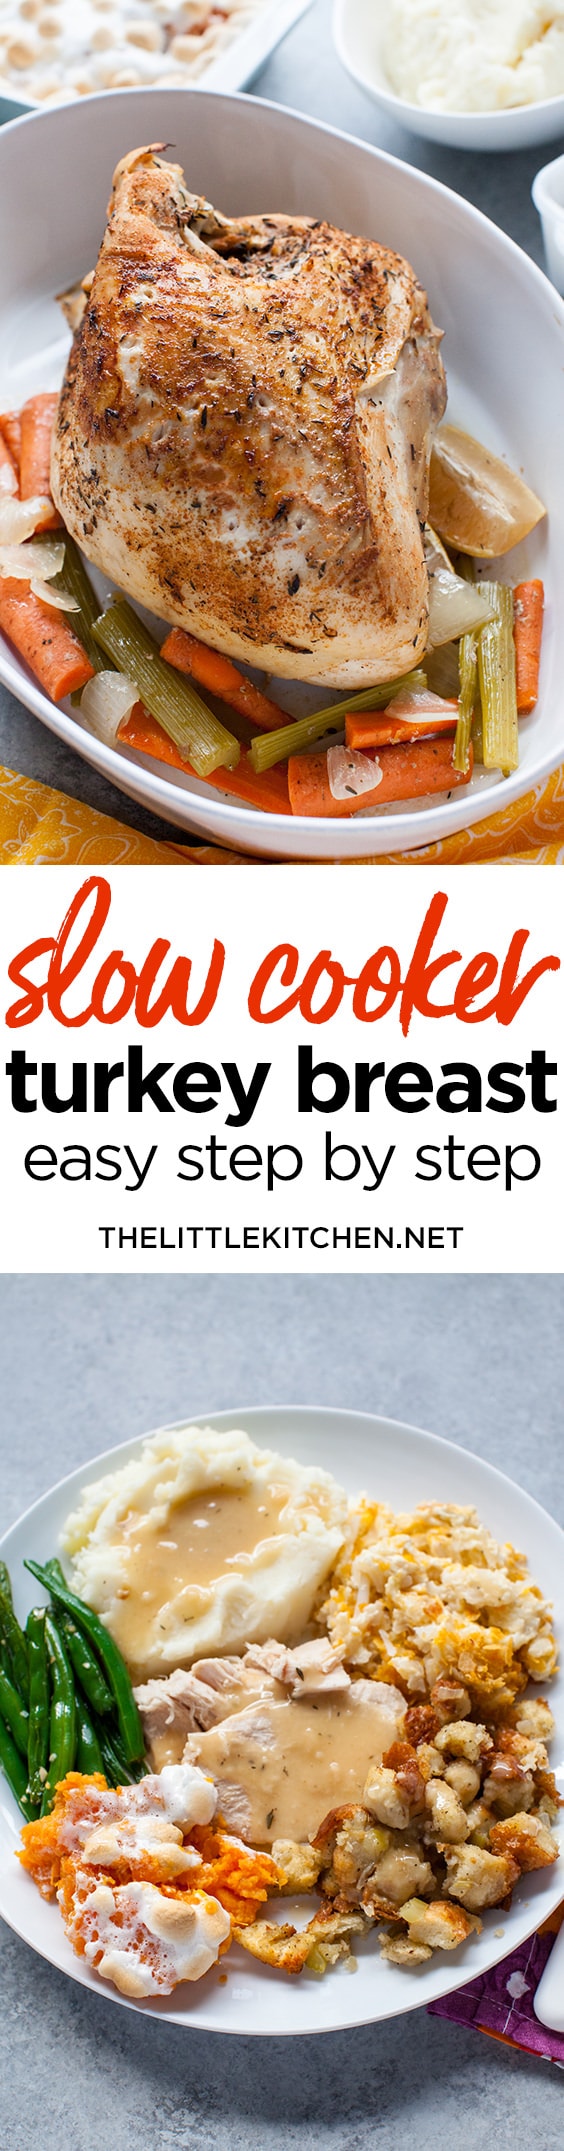 Slow Cooker Turkey Breast from thelittlekitchen.net